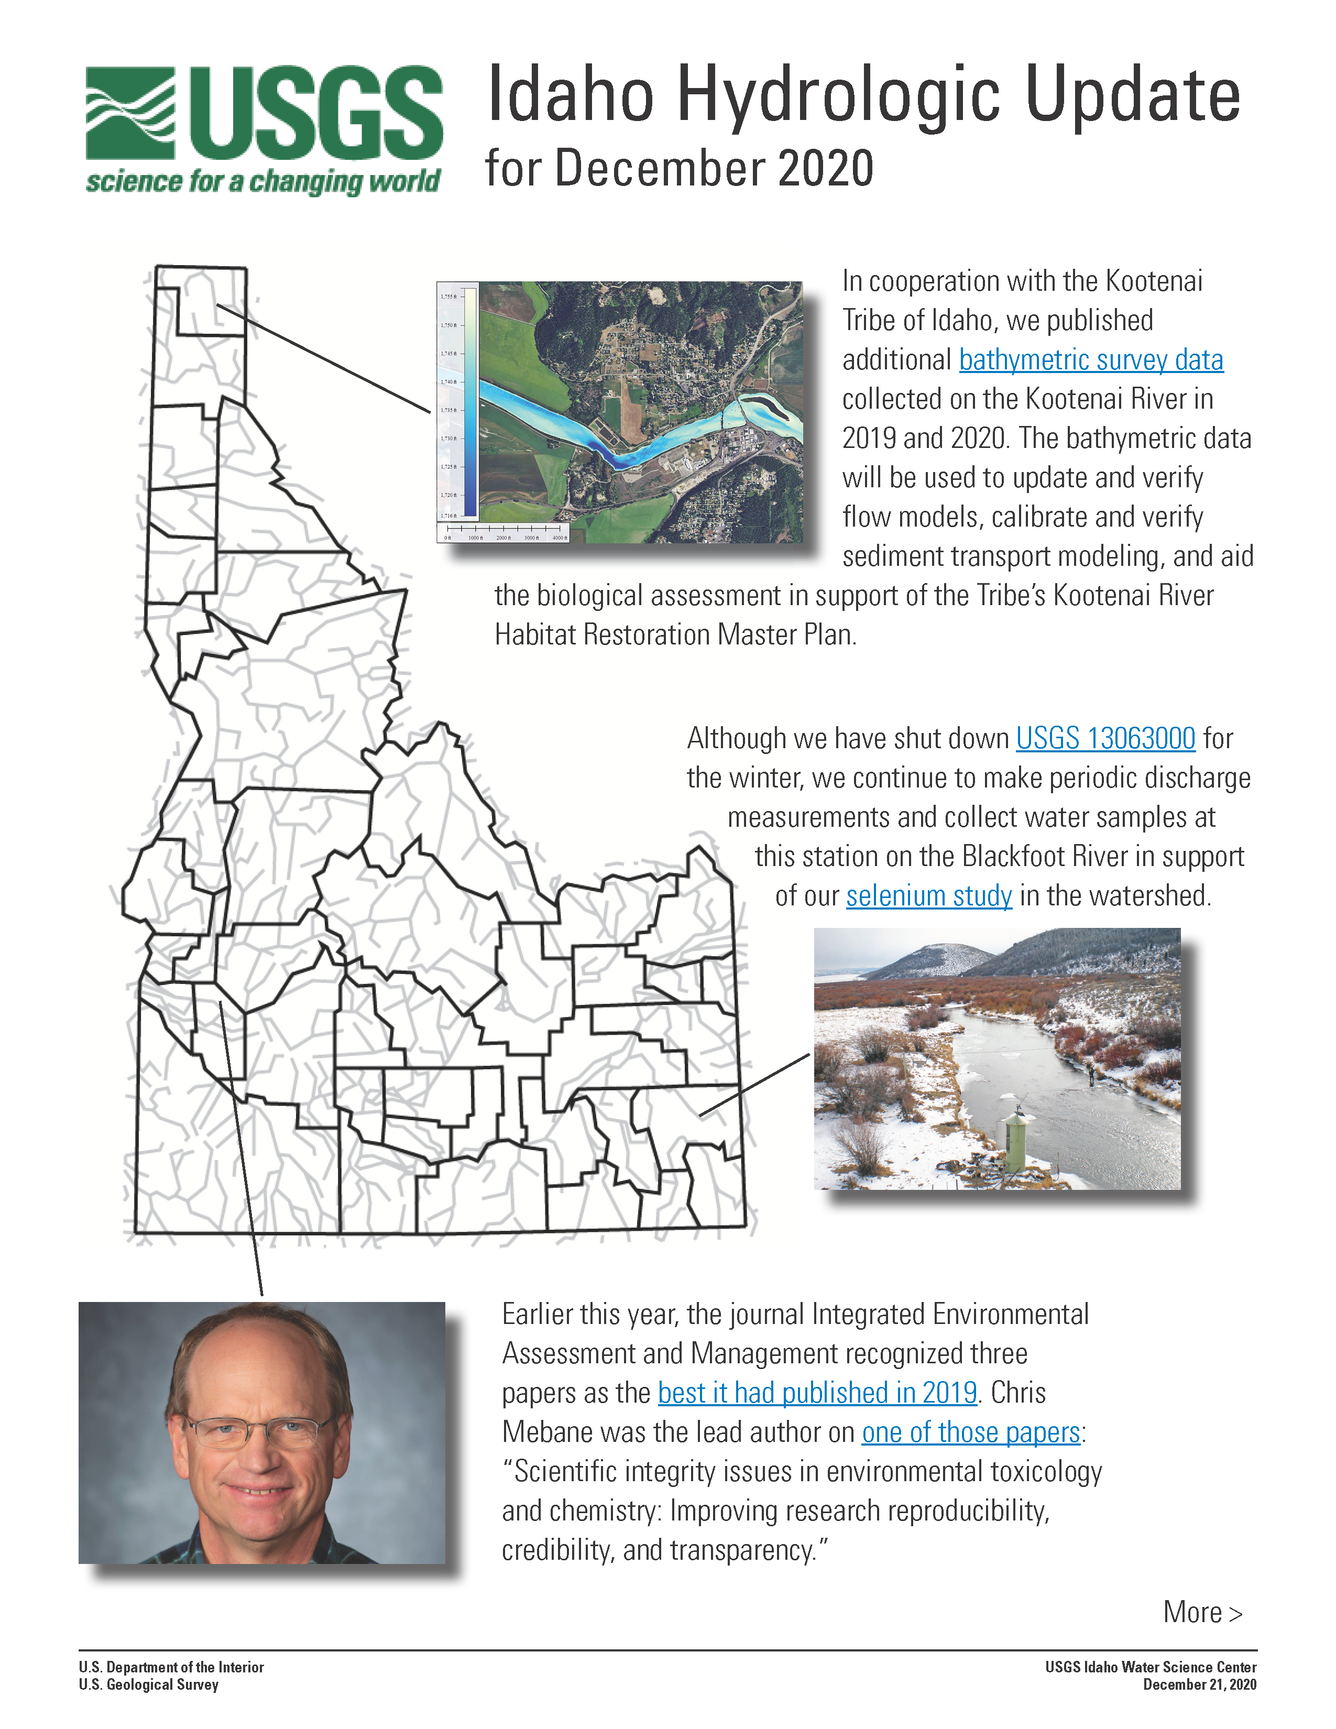 Idaho Hydrologic Update, December 2020